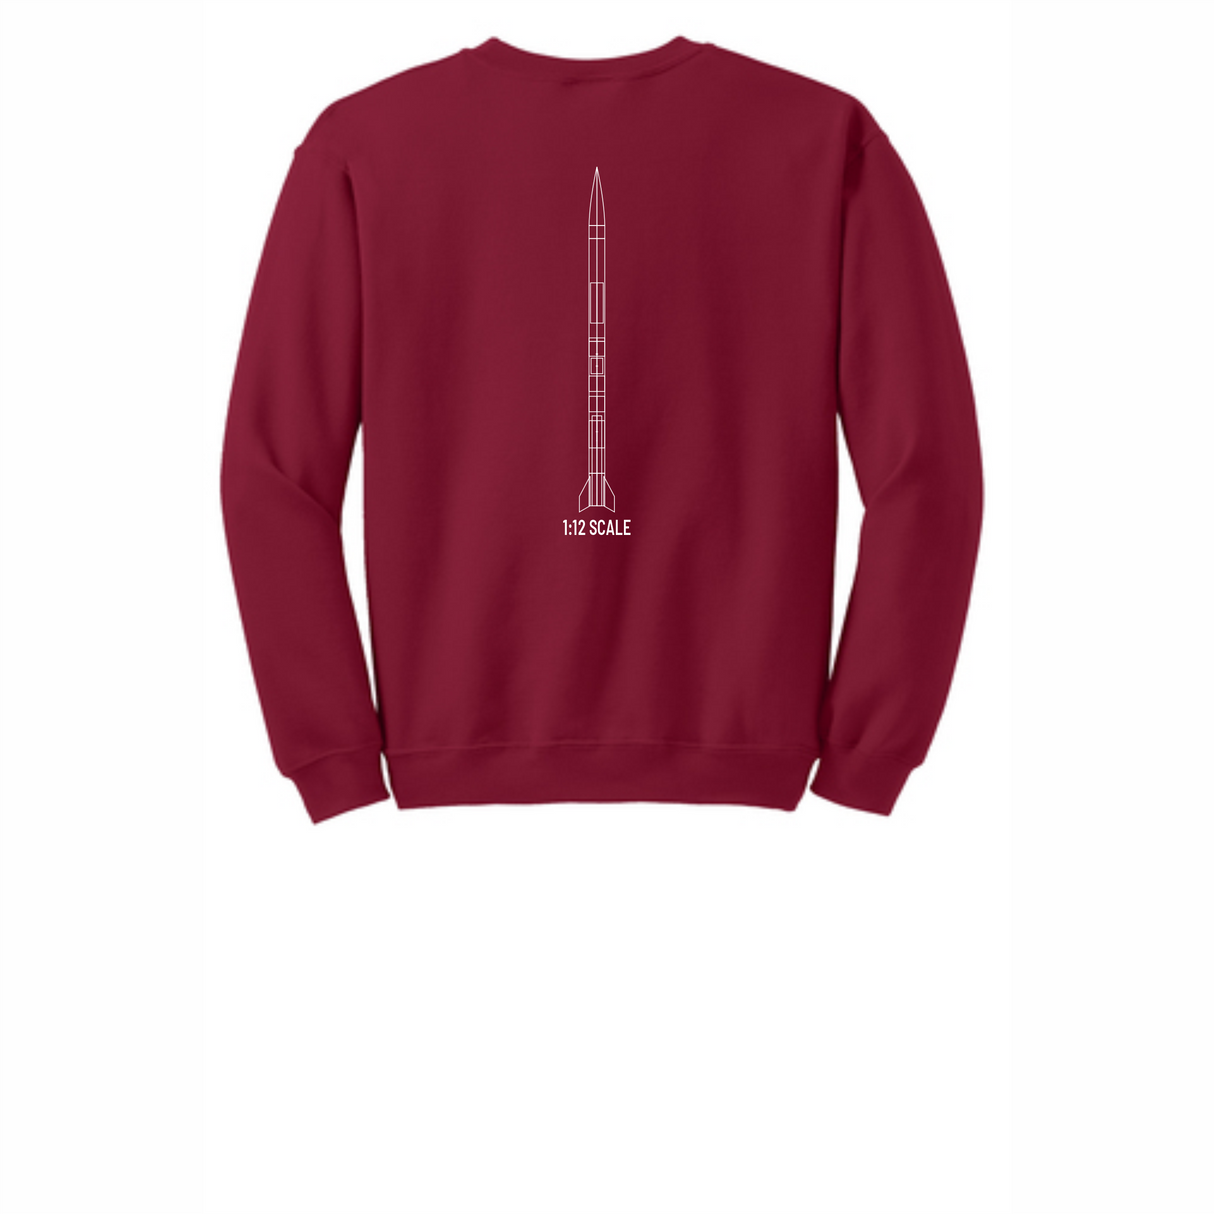 Atomic Aggies Crewneck Sweatshirt